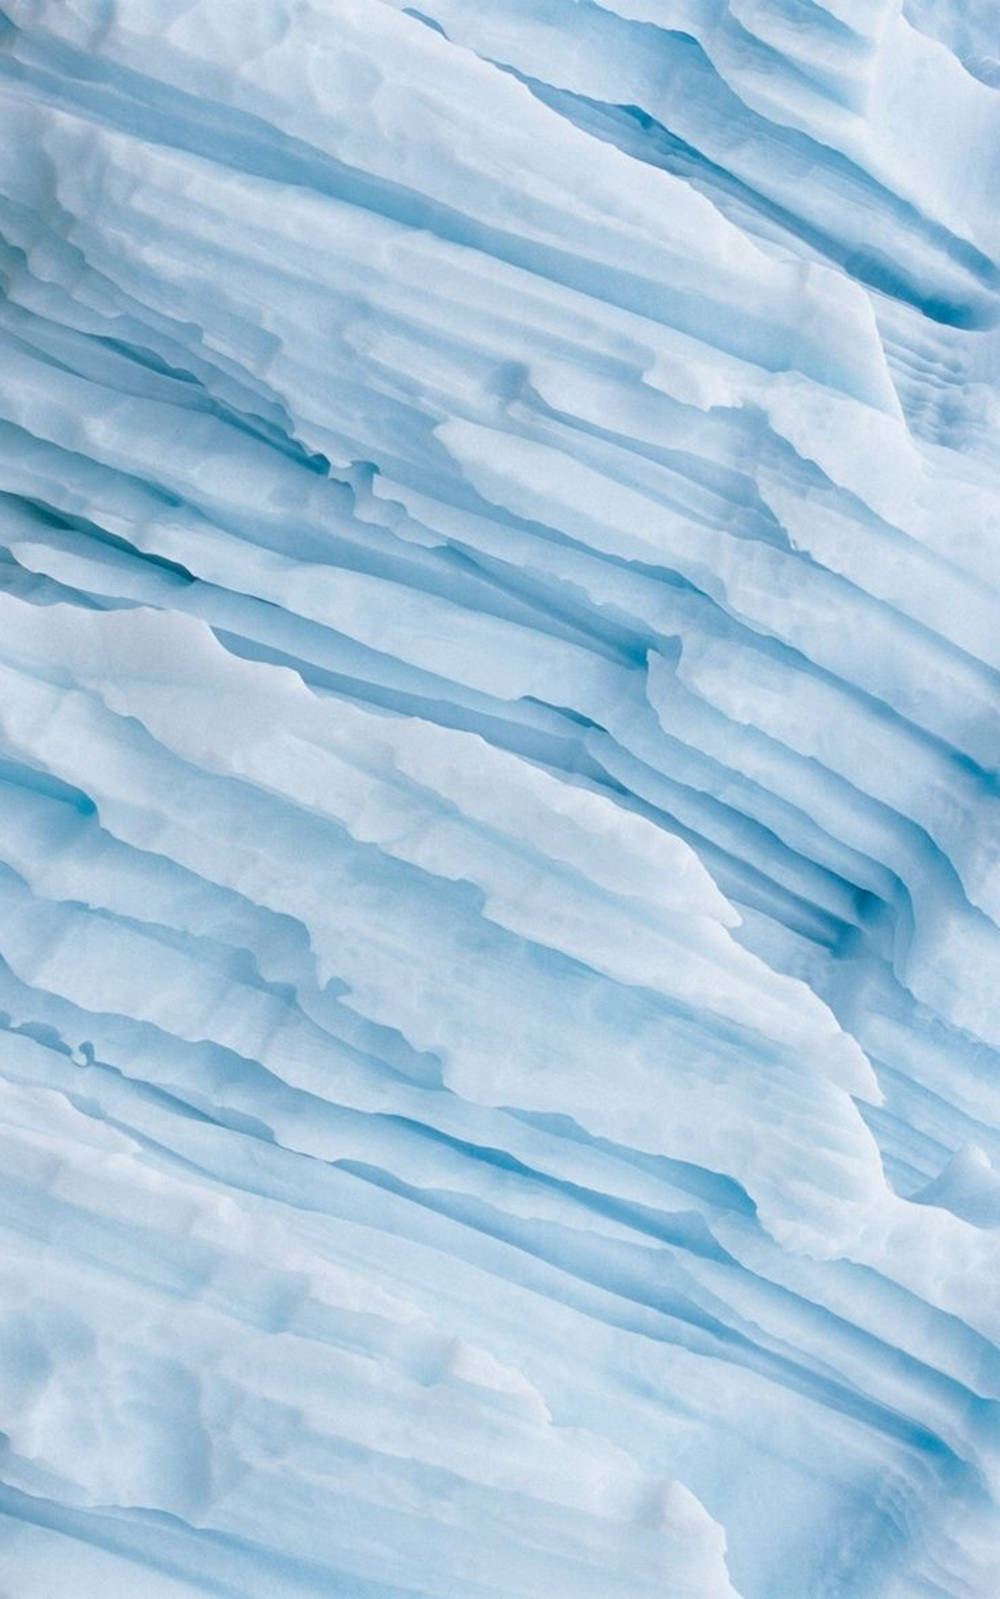 Textured Ice Sheet Blue Aesthetic Tumblr